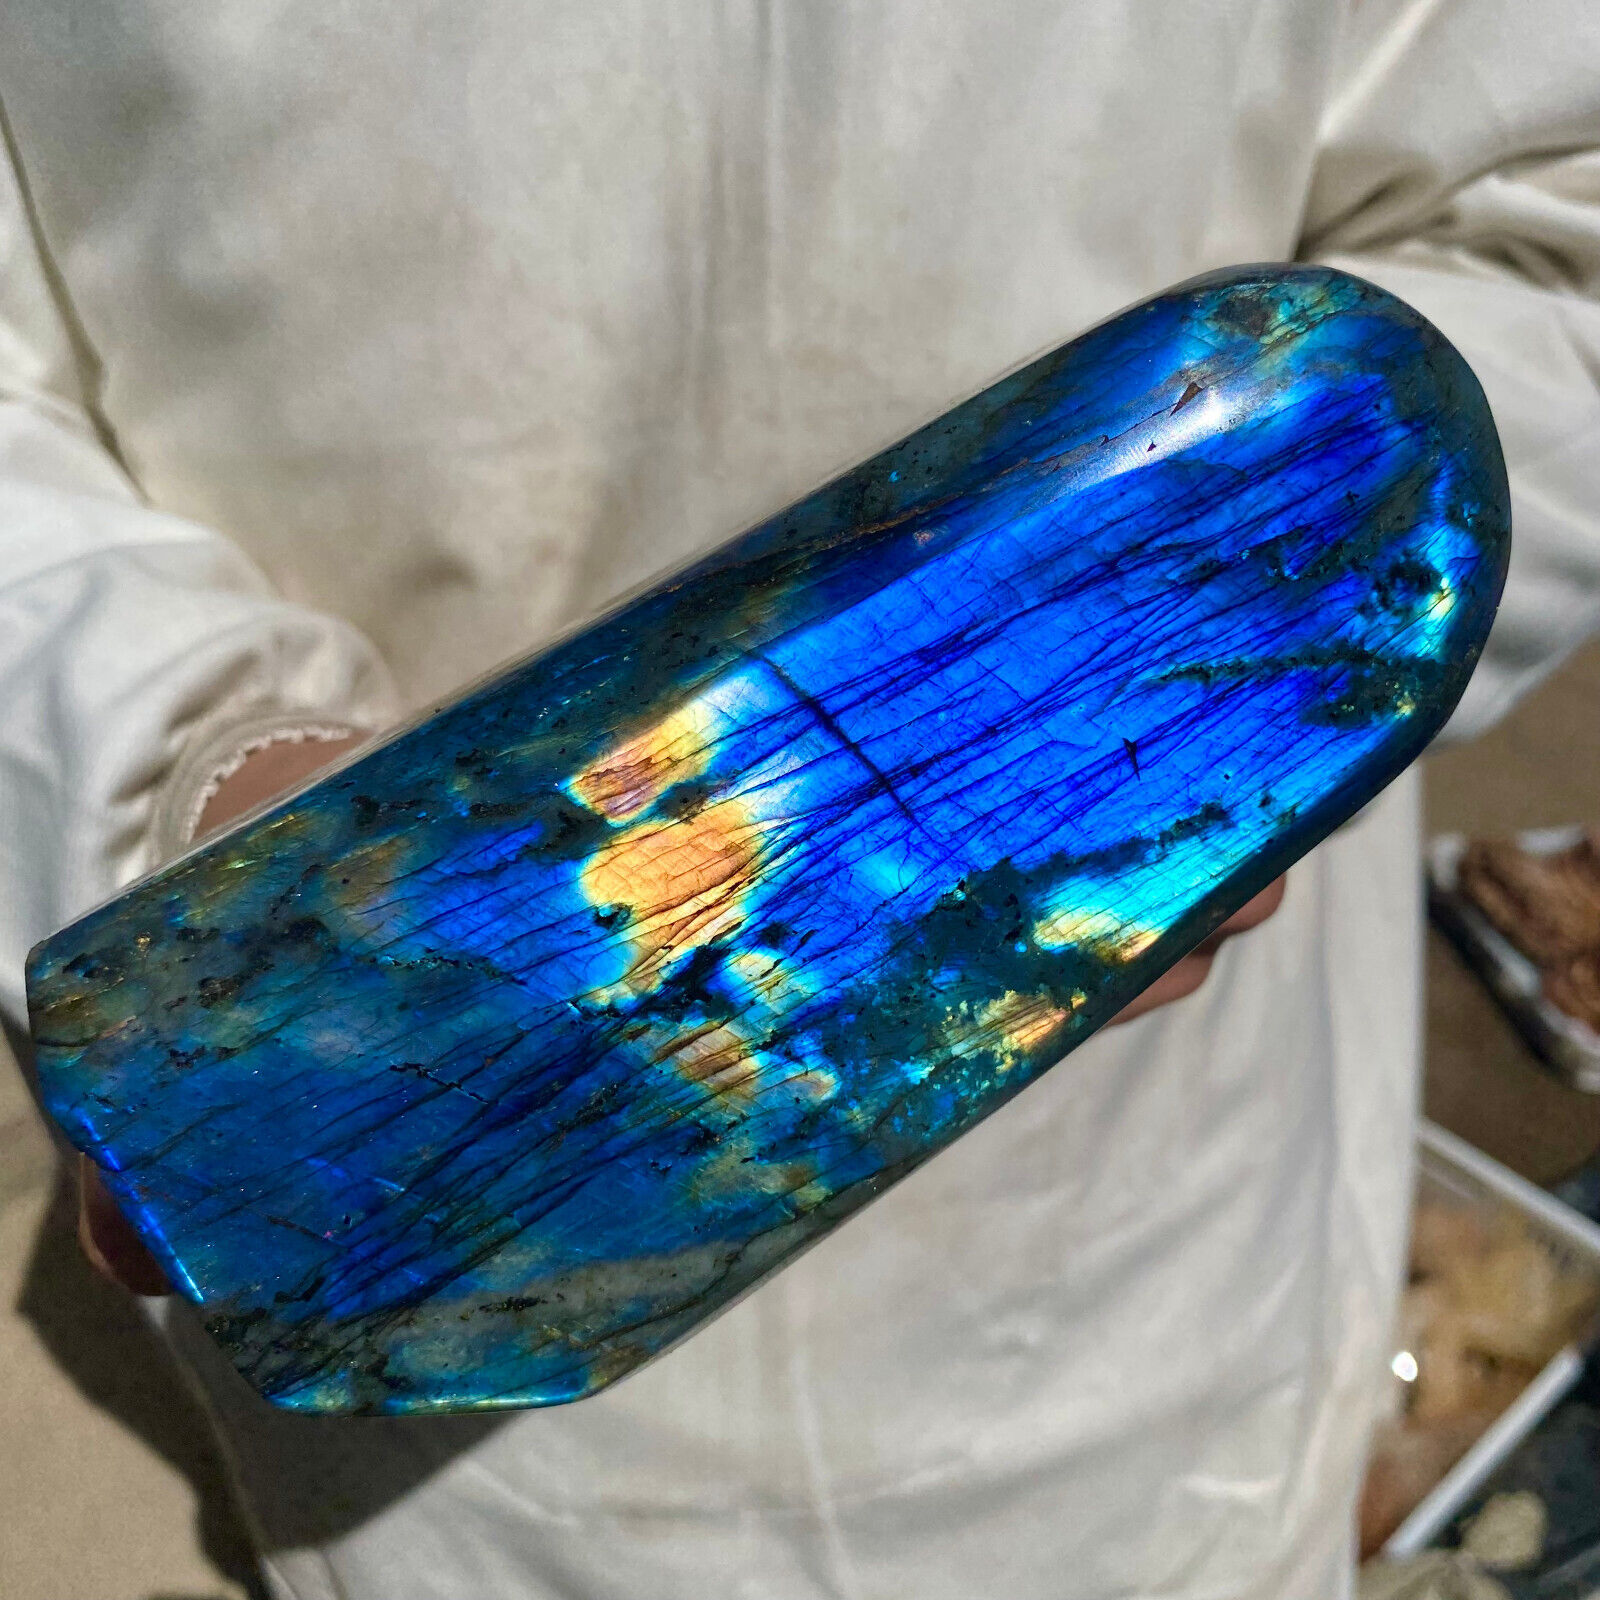 3lb Large Natural Labradorite Quartz Crystal Display Mineral Specimen Healing